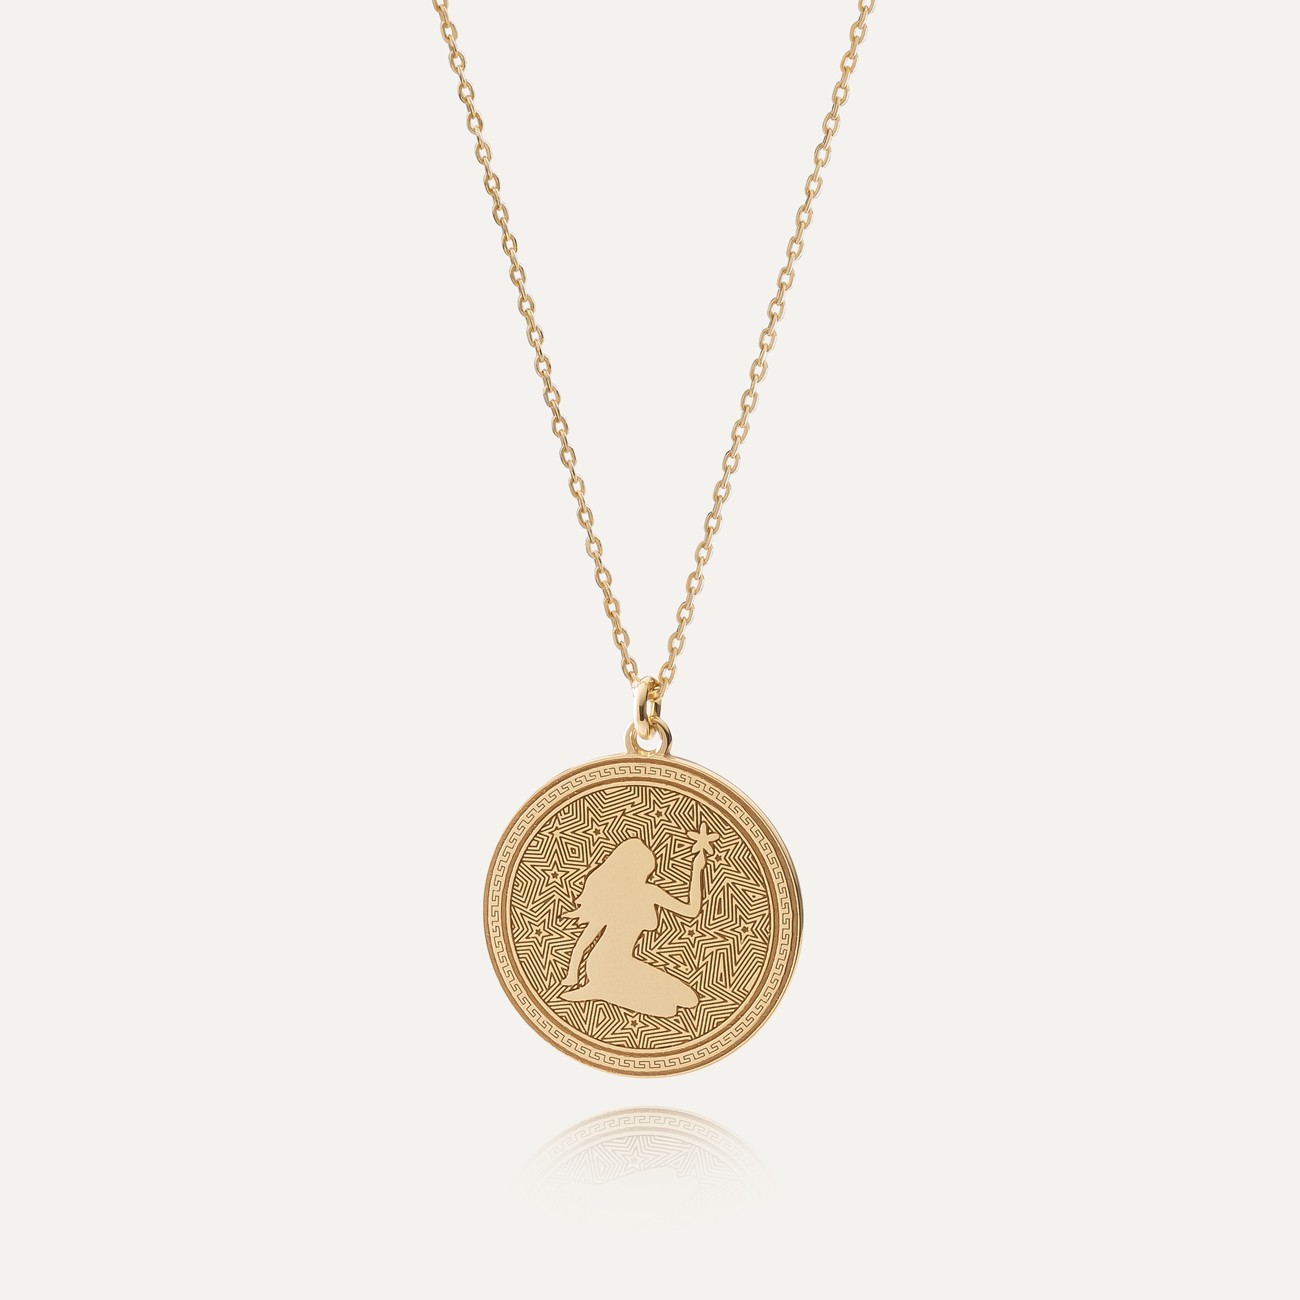 LION zodiac sign necklace silver 925